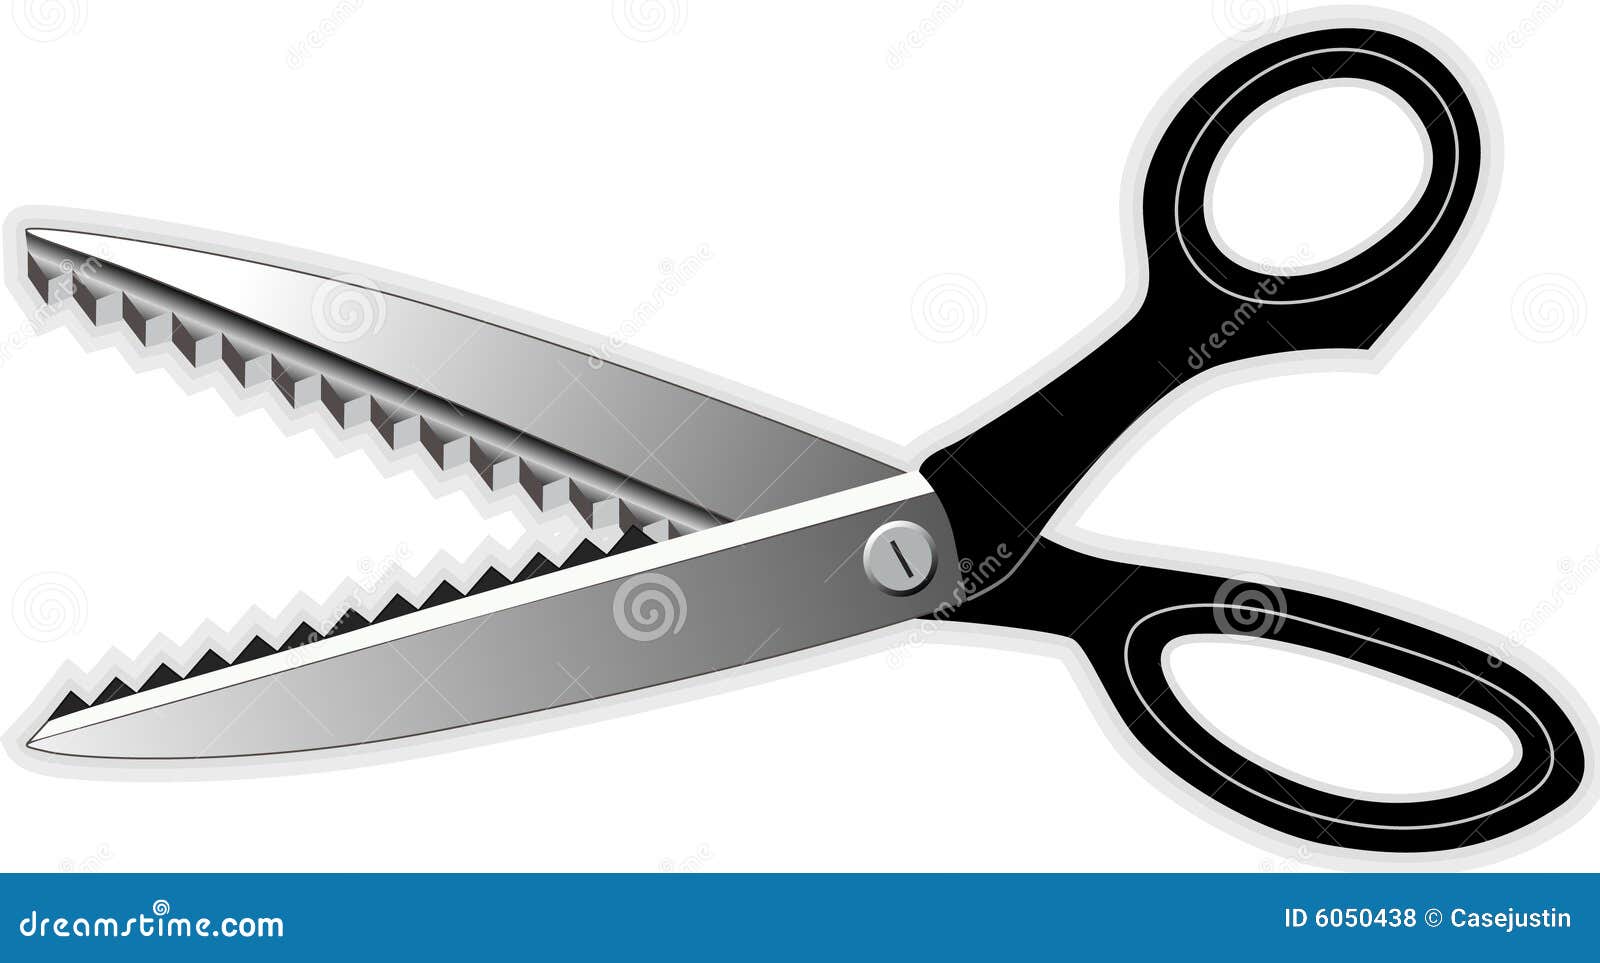 pinking-shears-scissors-6050438.jpg